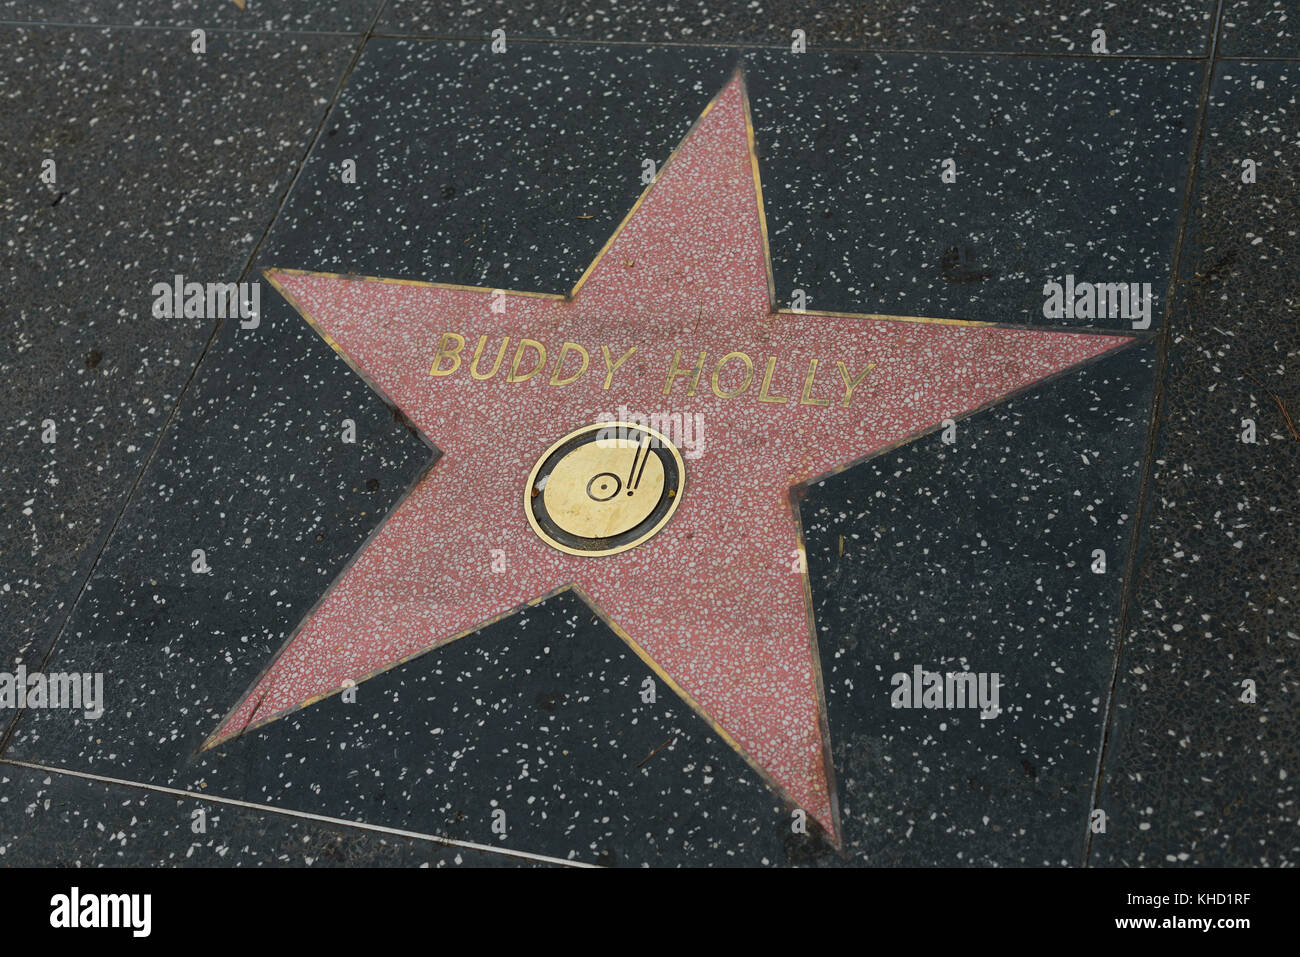 HOLLYWOOD, CA - DEZEMBER 06: Buddy Holly Star auf dem Hollywood Walk of Fame in Hollywood, Kalifornien am 6. Dezember 2016. Stockfoto